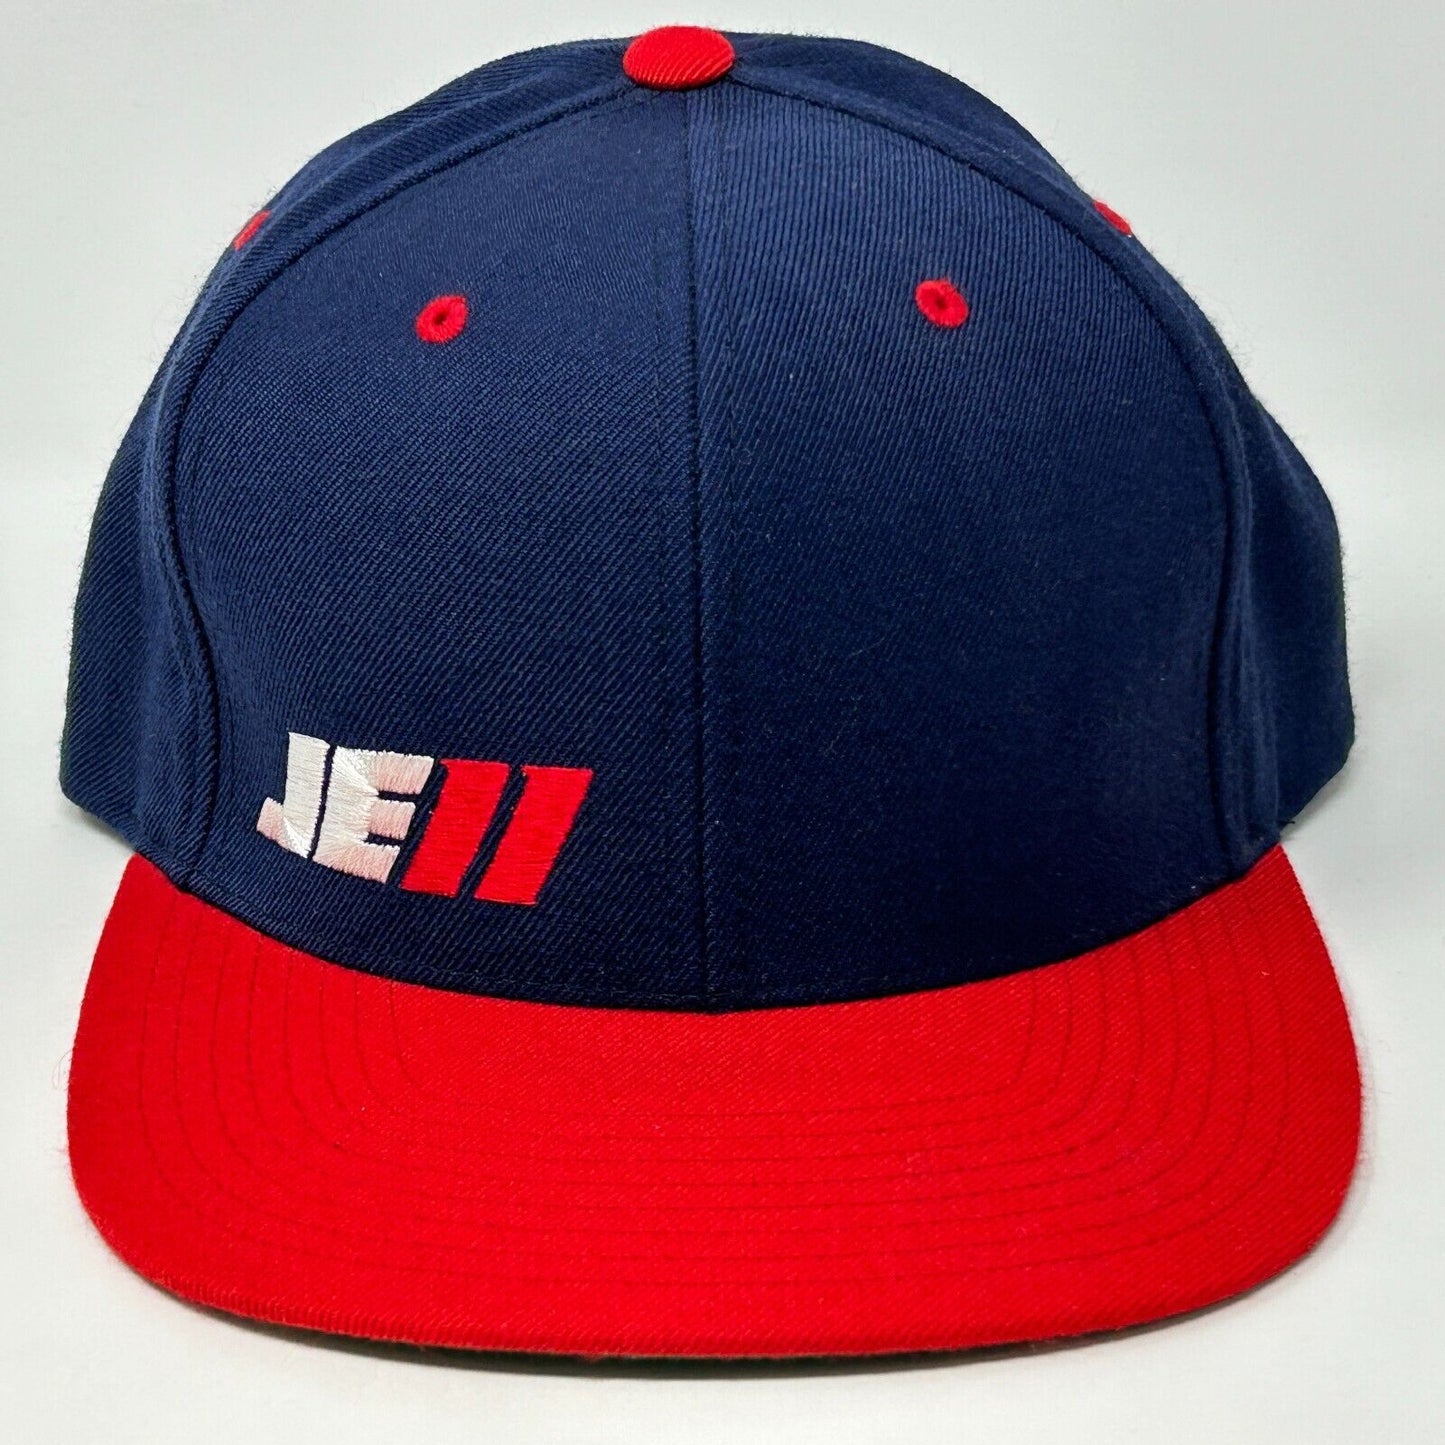 JE11 Julian Edelman Hat Blue New England Patriots 6 Panel Snapback Baseball Cap